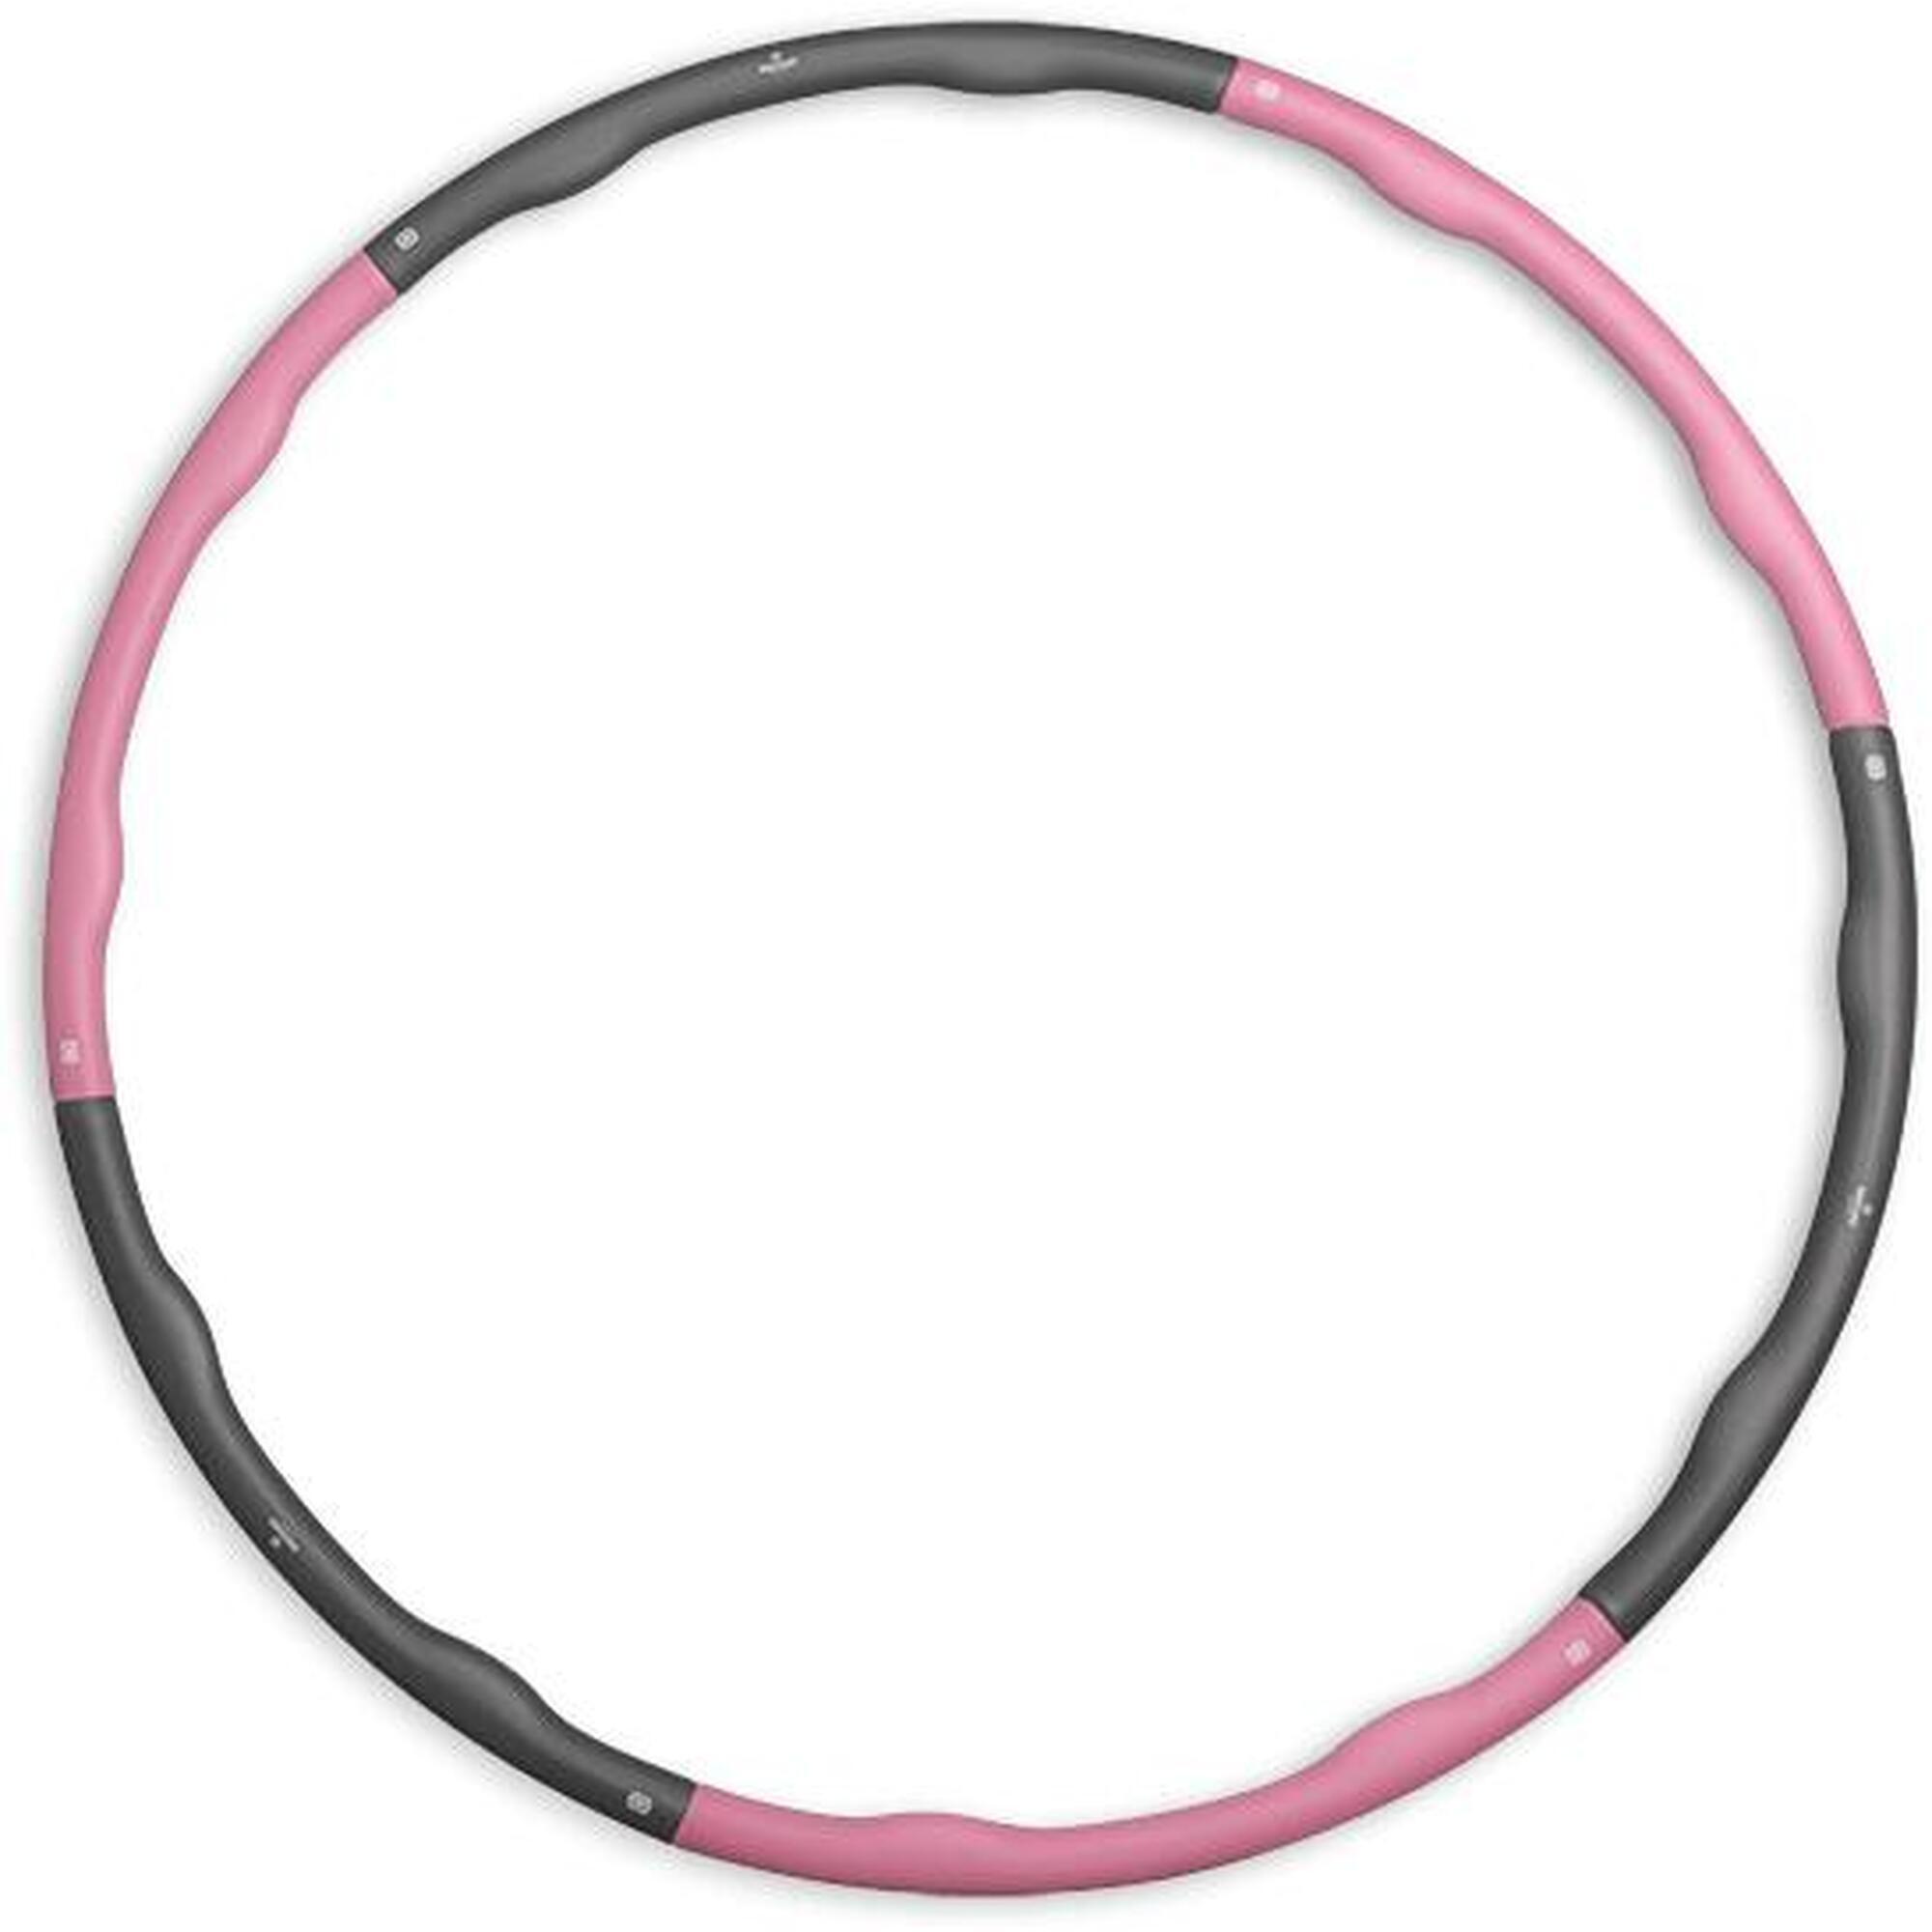 Fitness hula hoop - Cerchio - 1,5 kg - Rosa/grigio - Ø 100 cm